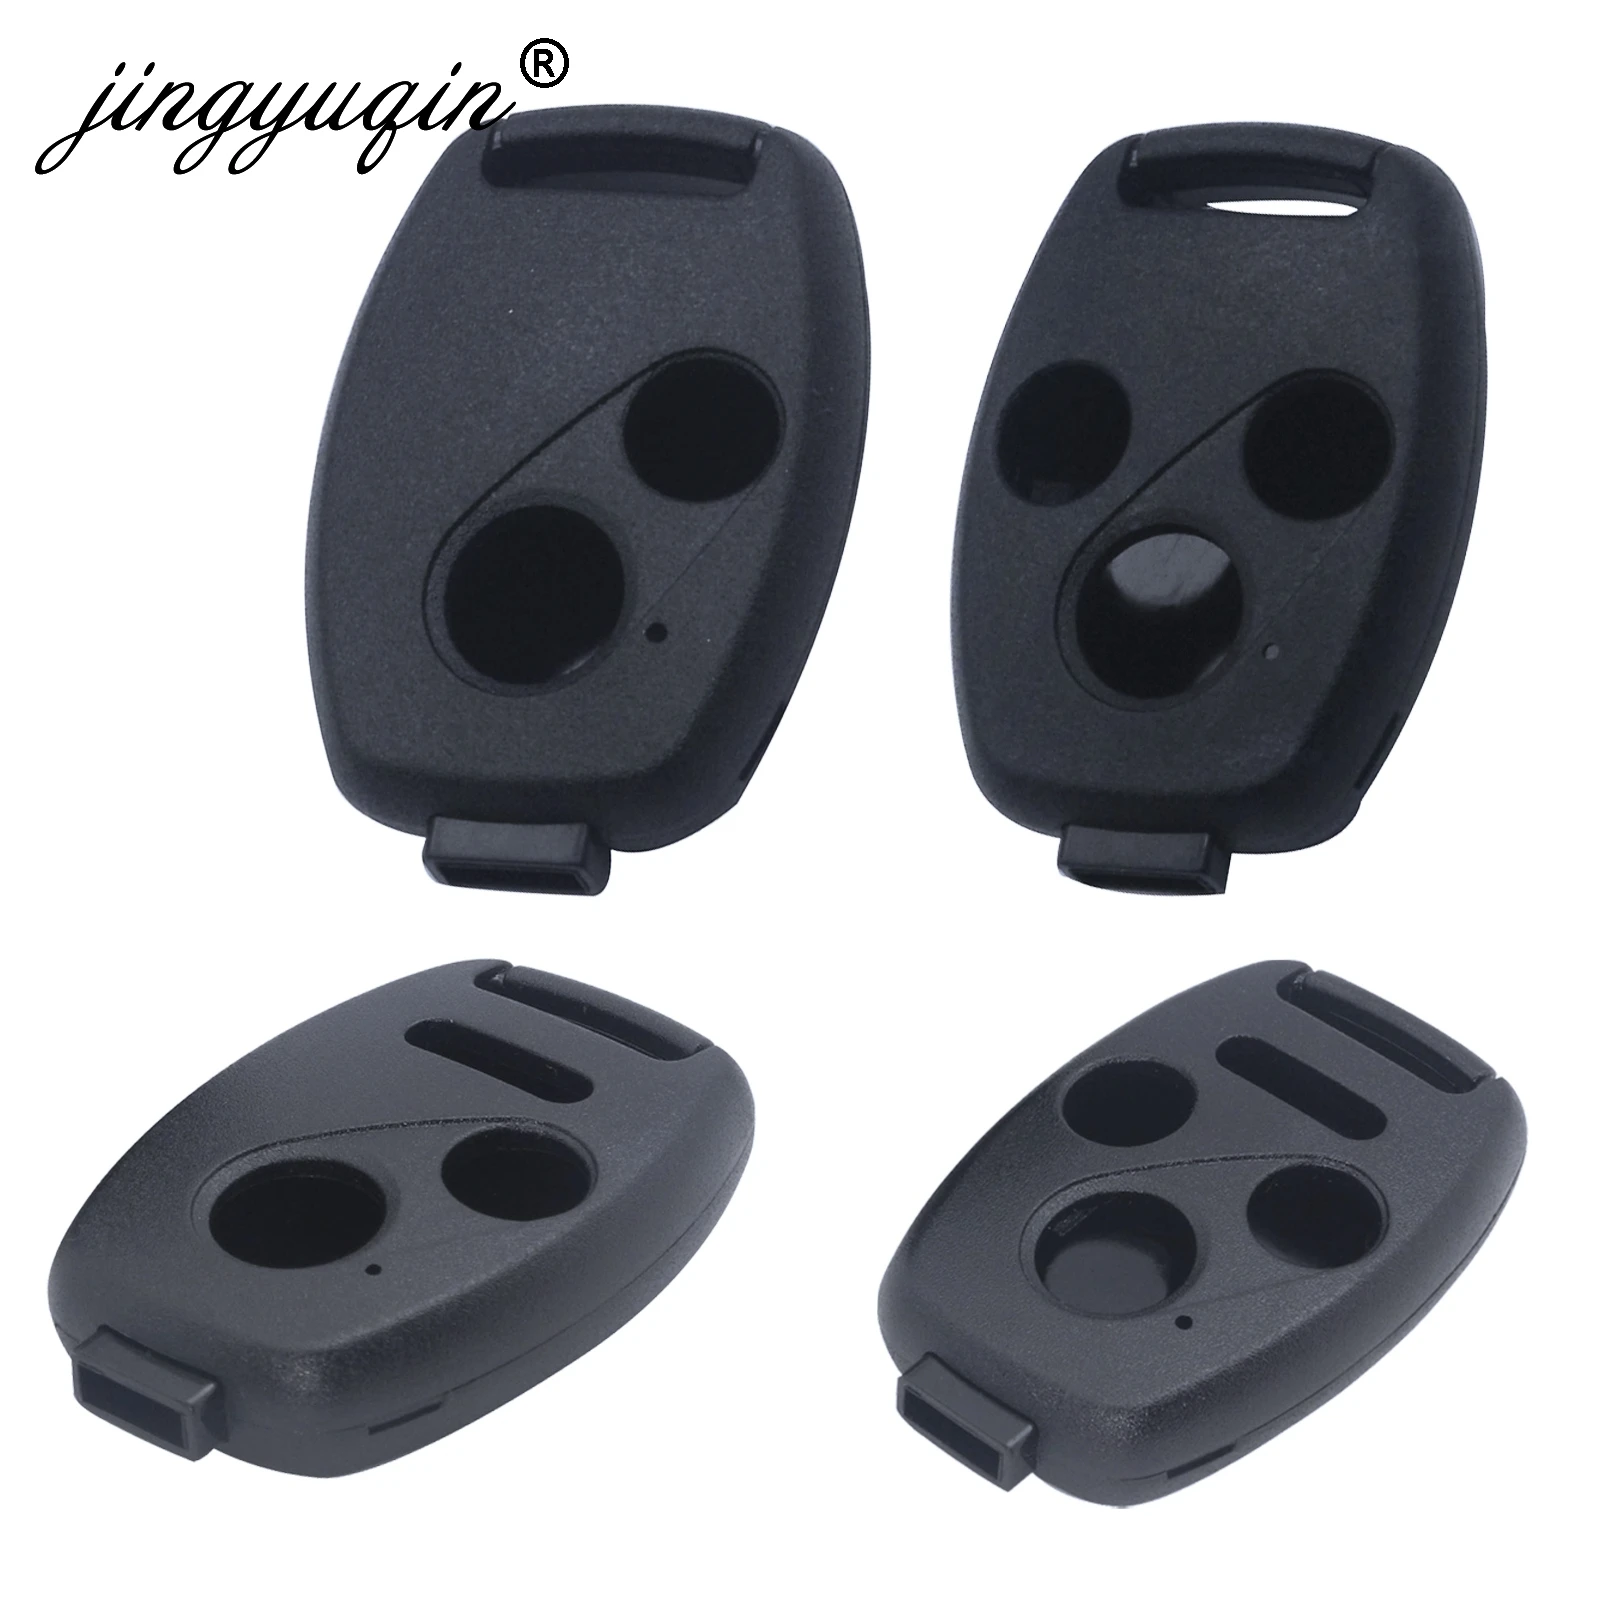 

jingyuqin 50pcs Remote Key Shell For HONDA Accord Civic Fit City Odyssey Element CRV Jazz HRV Pilot 2/3/2+1/3+1 Buttons Fob Case